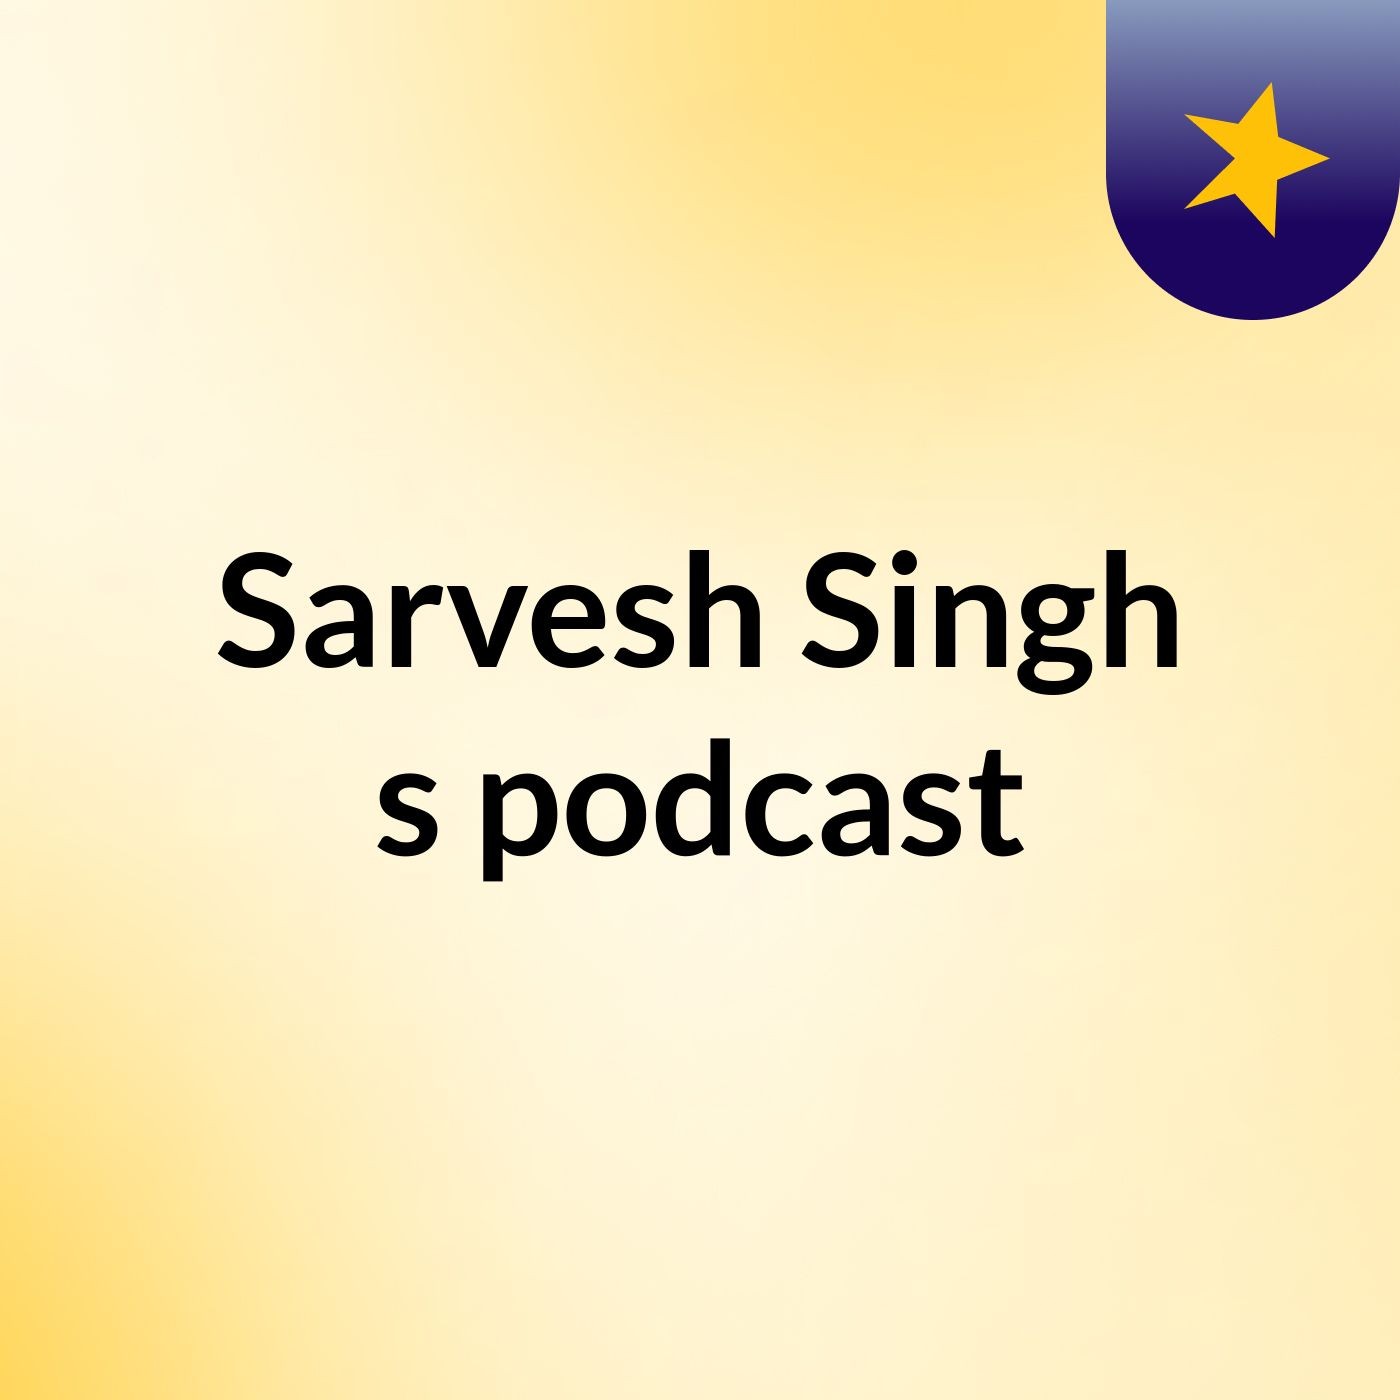 Sarvesh Singh's podcast